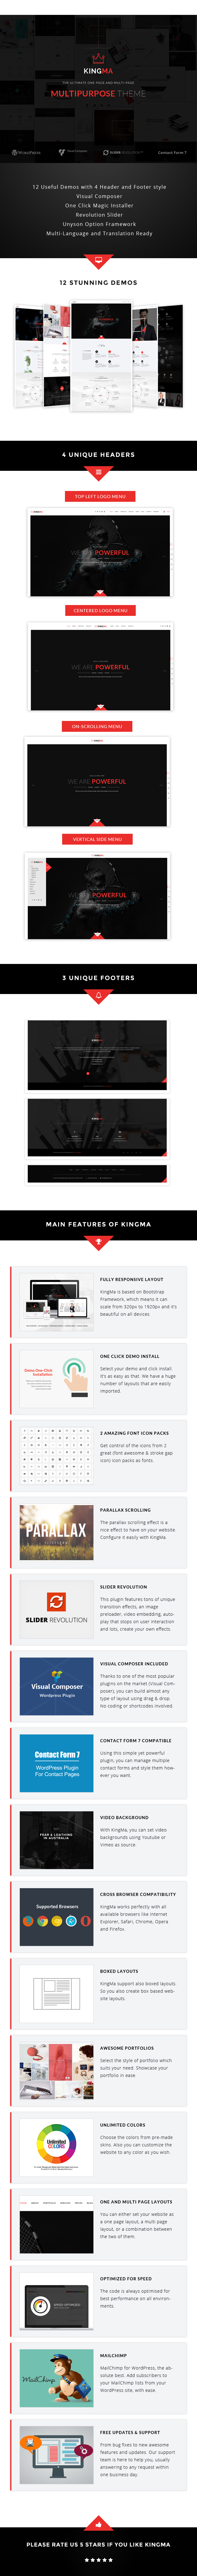 KingMa | Creative Business Onepage & MultiPage Layout - 2